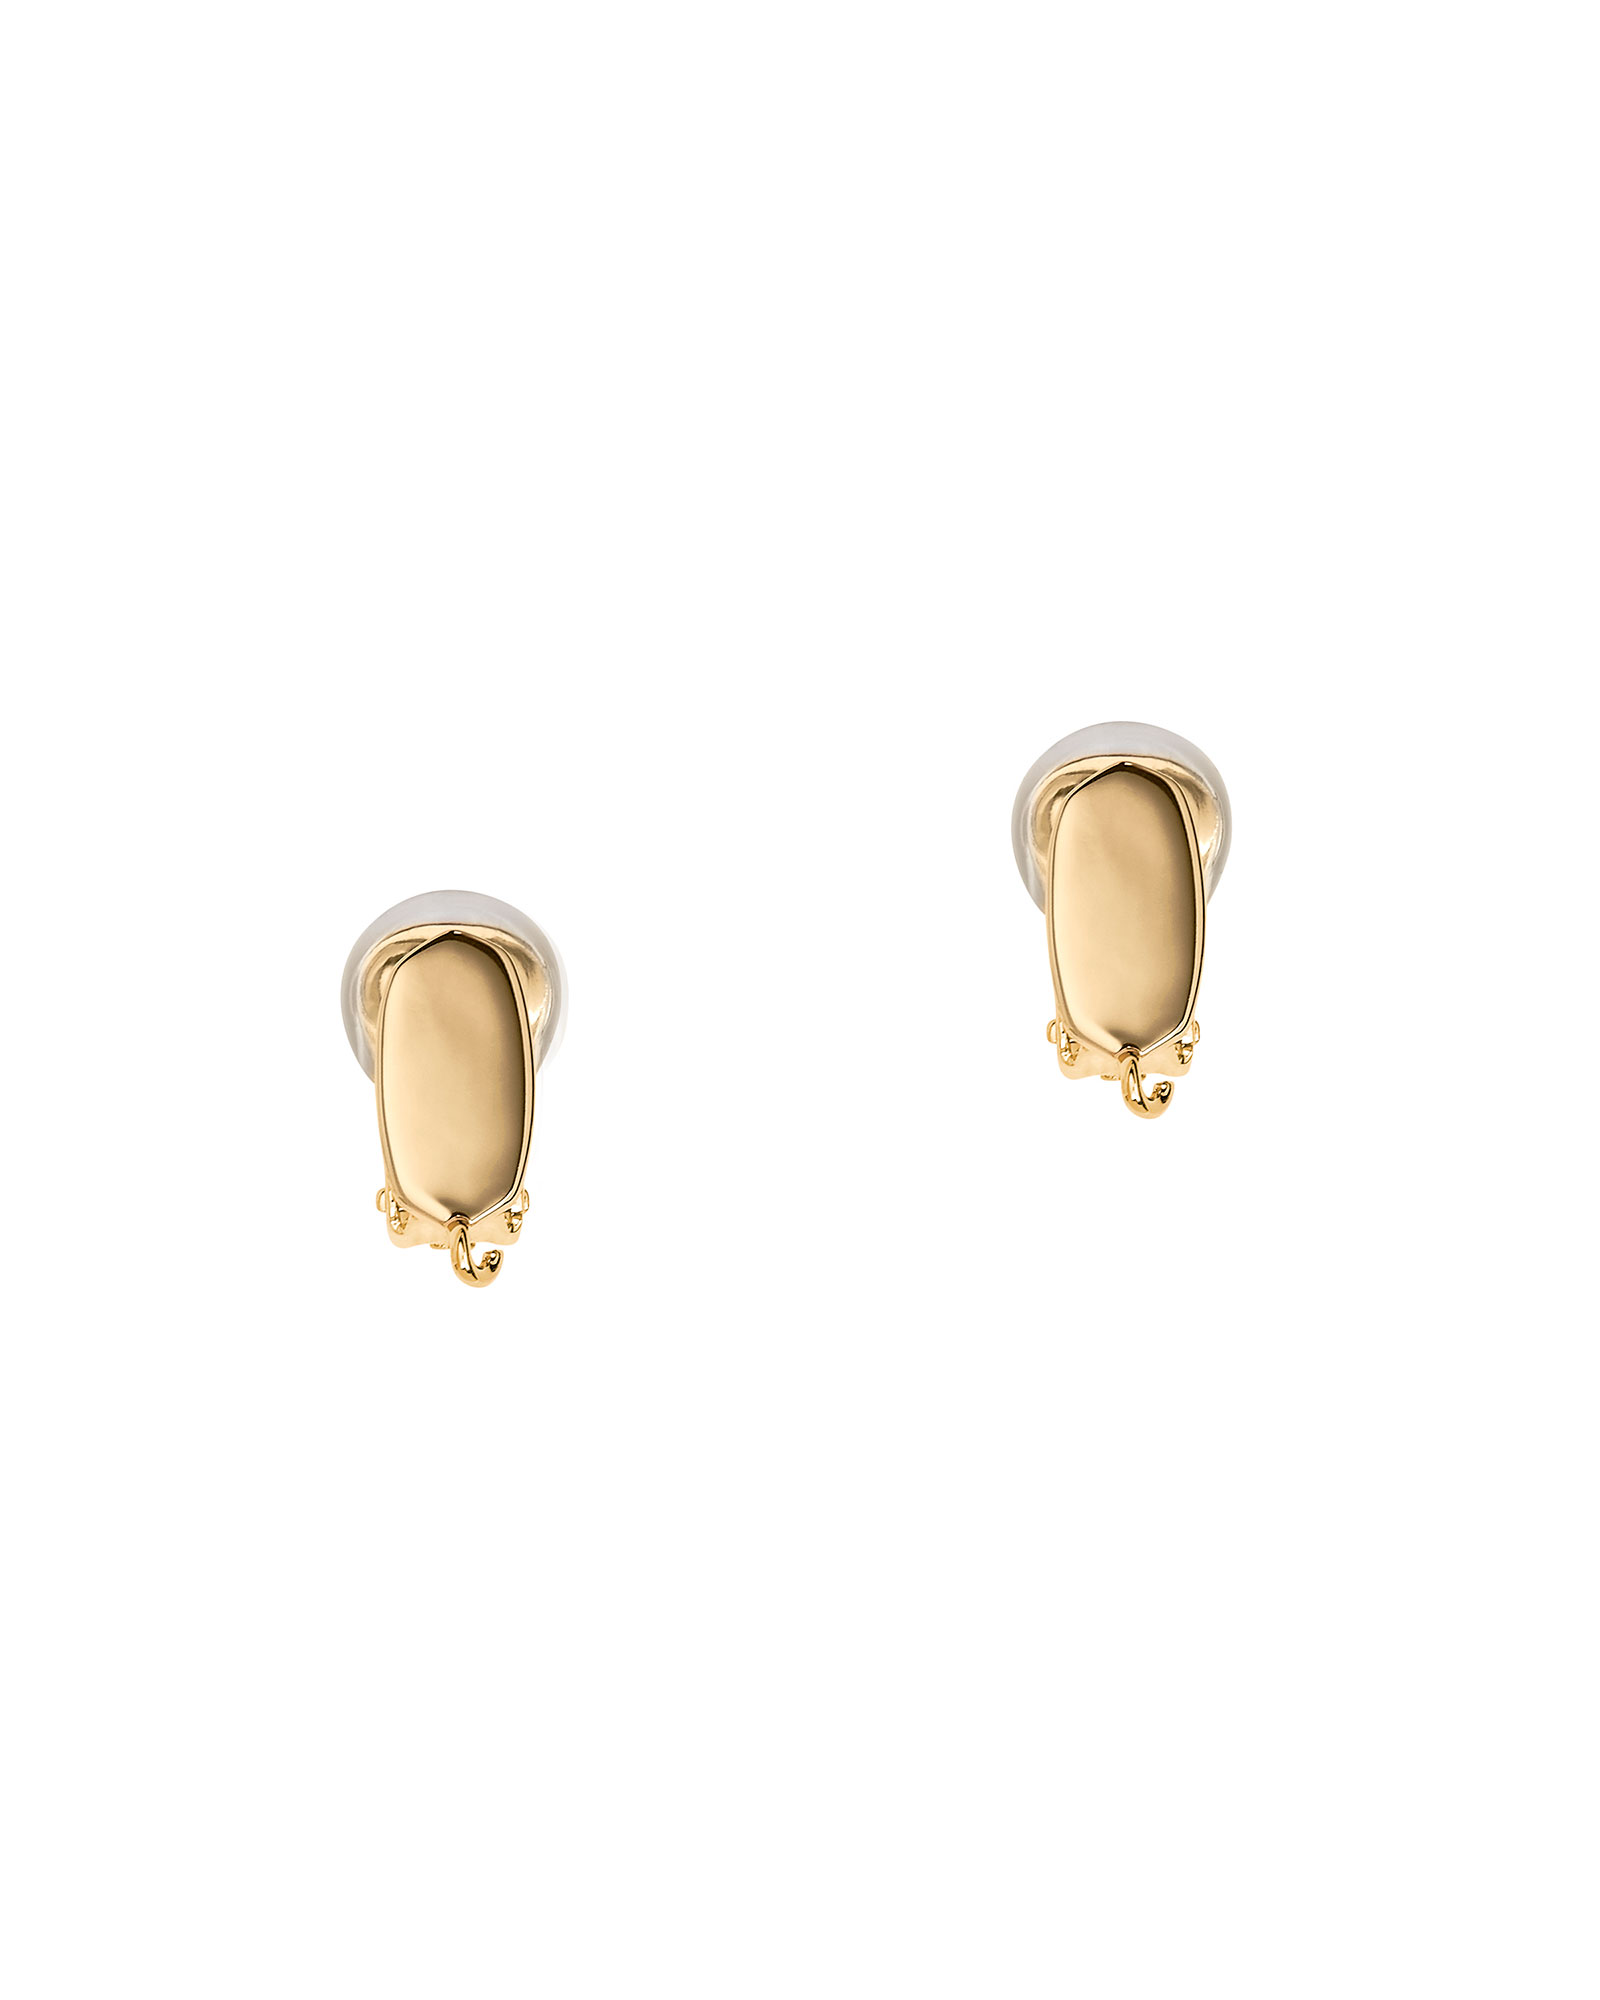 DIY Jewelry Repair: How To Convert Pierced Earrings To Clip-Ons 